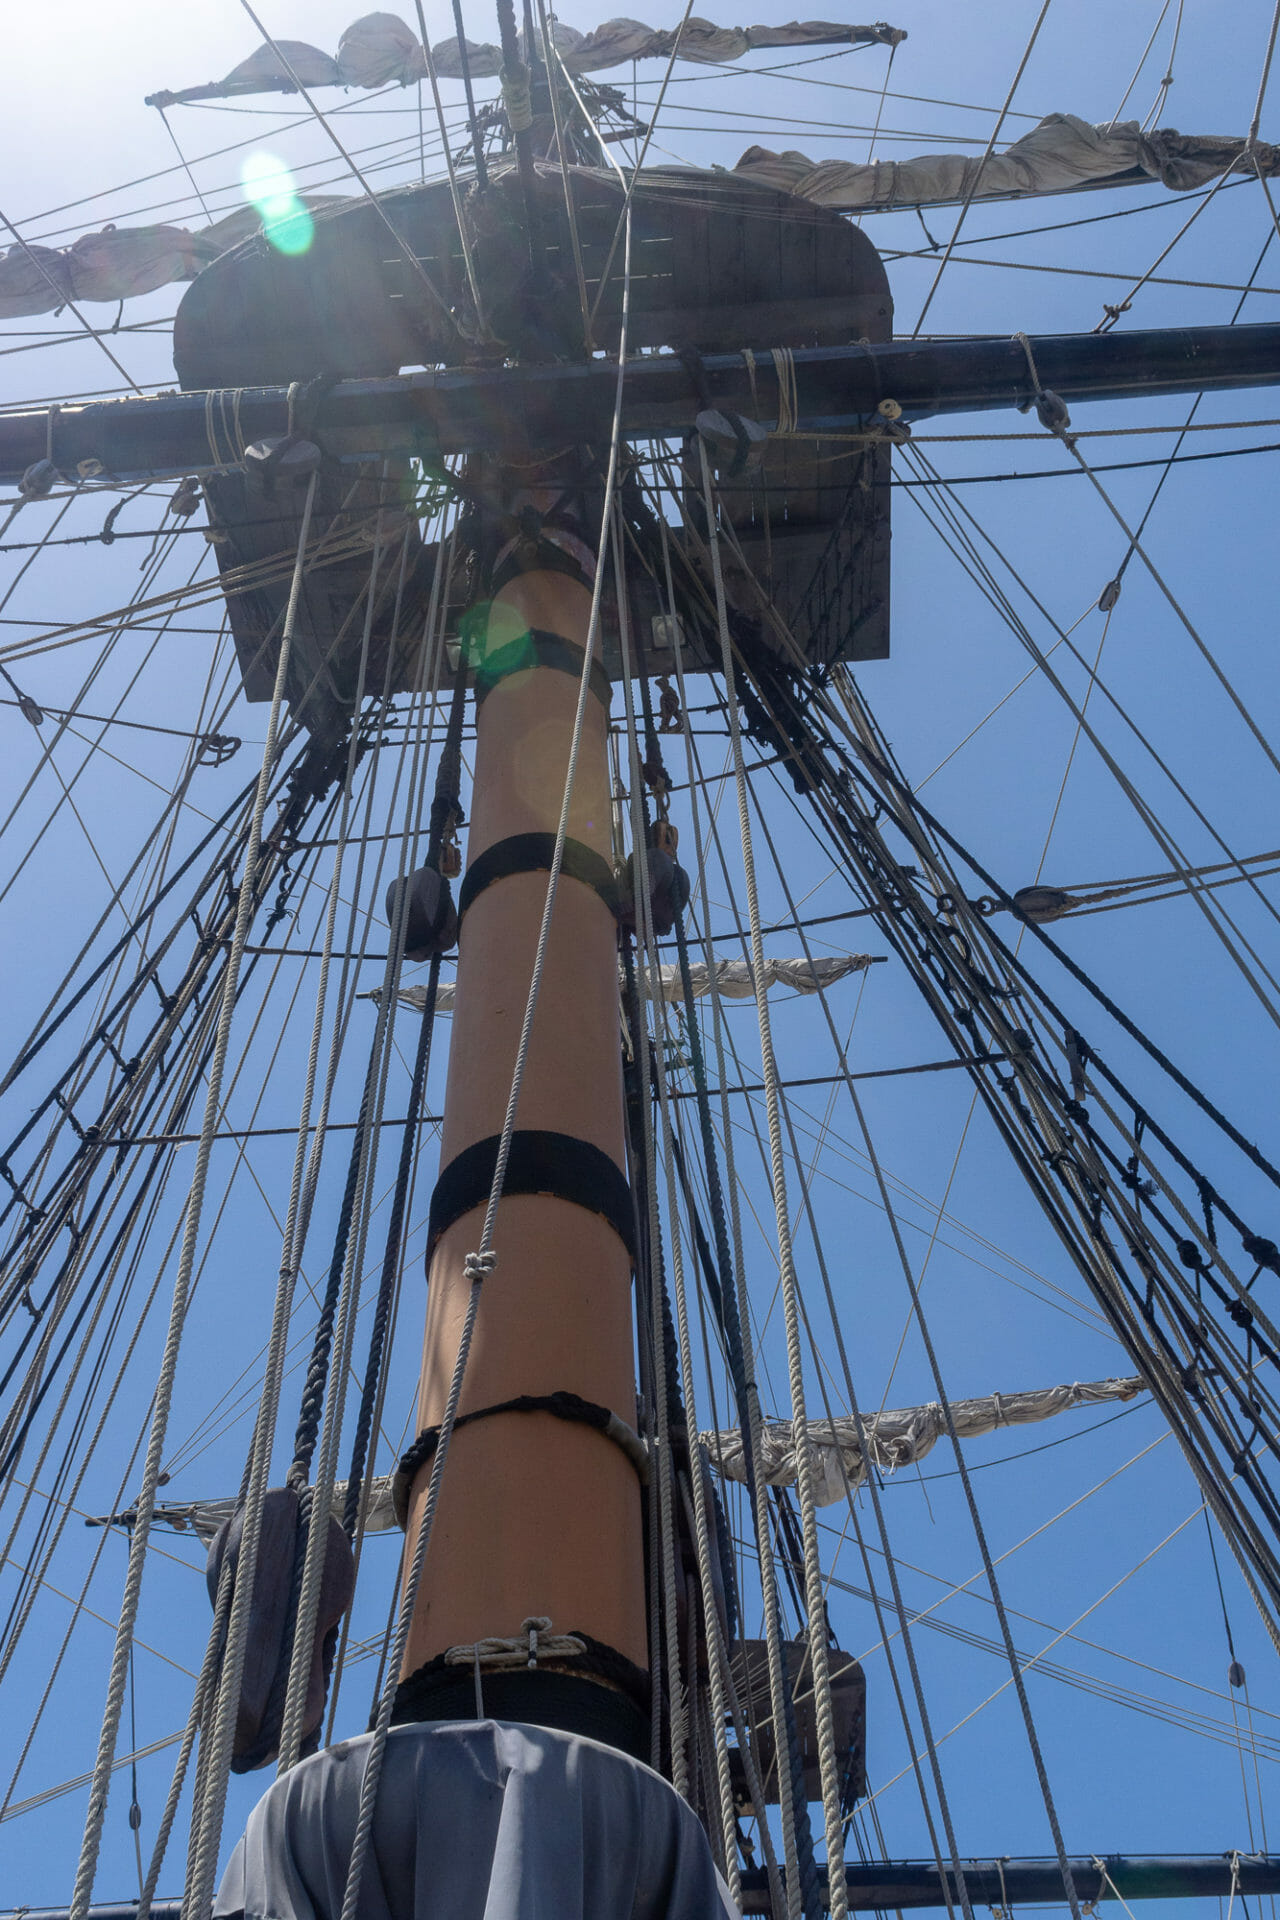 The main mast goes up a long ways!